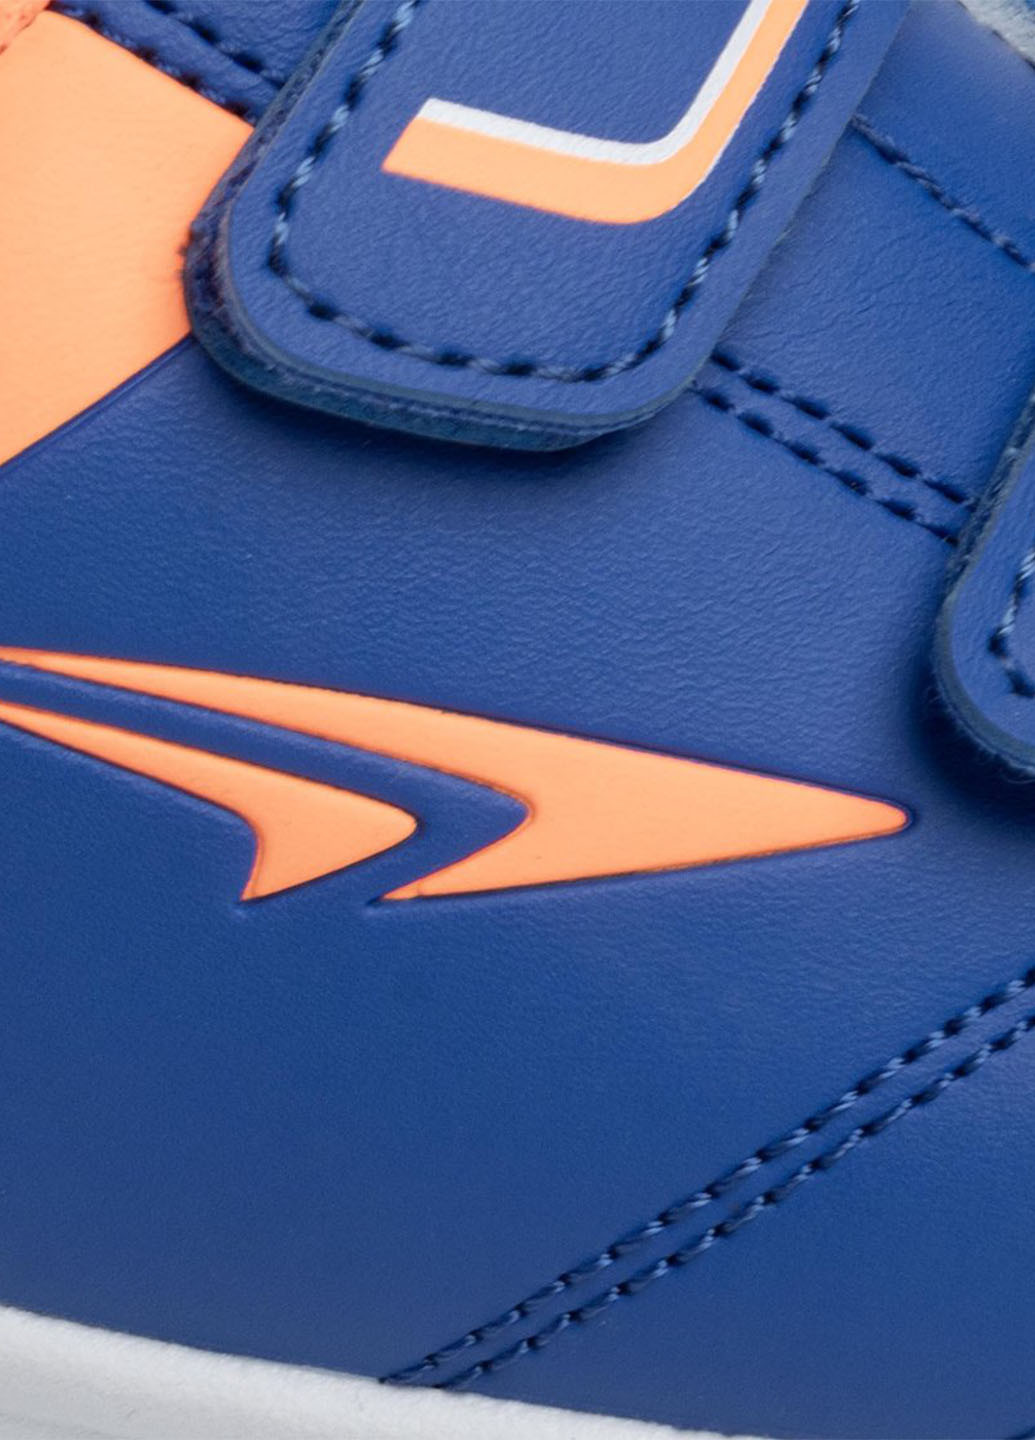 Синие демисезонные кросівки Sprandi CP70-18336